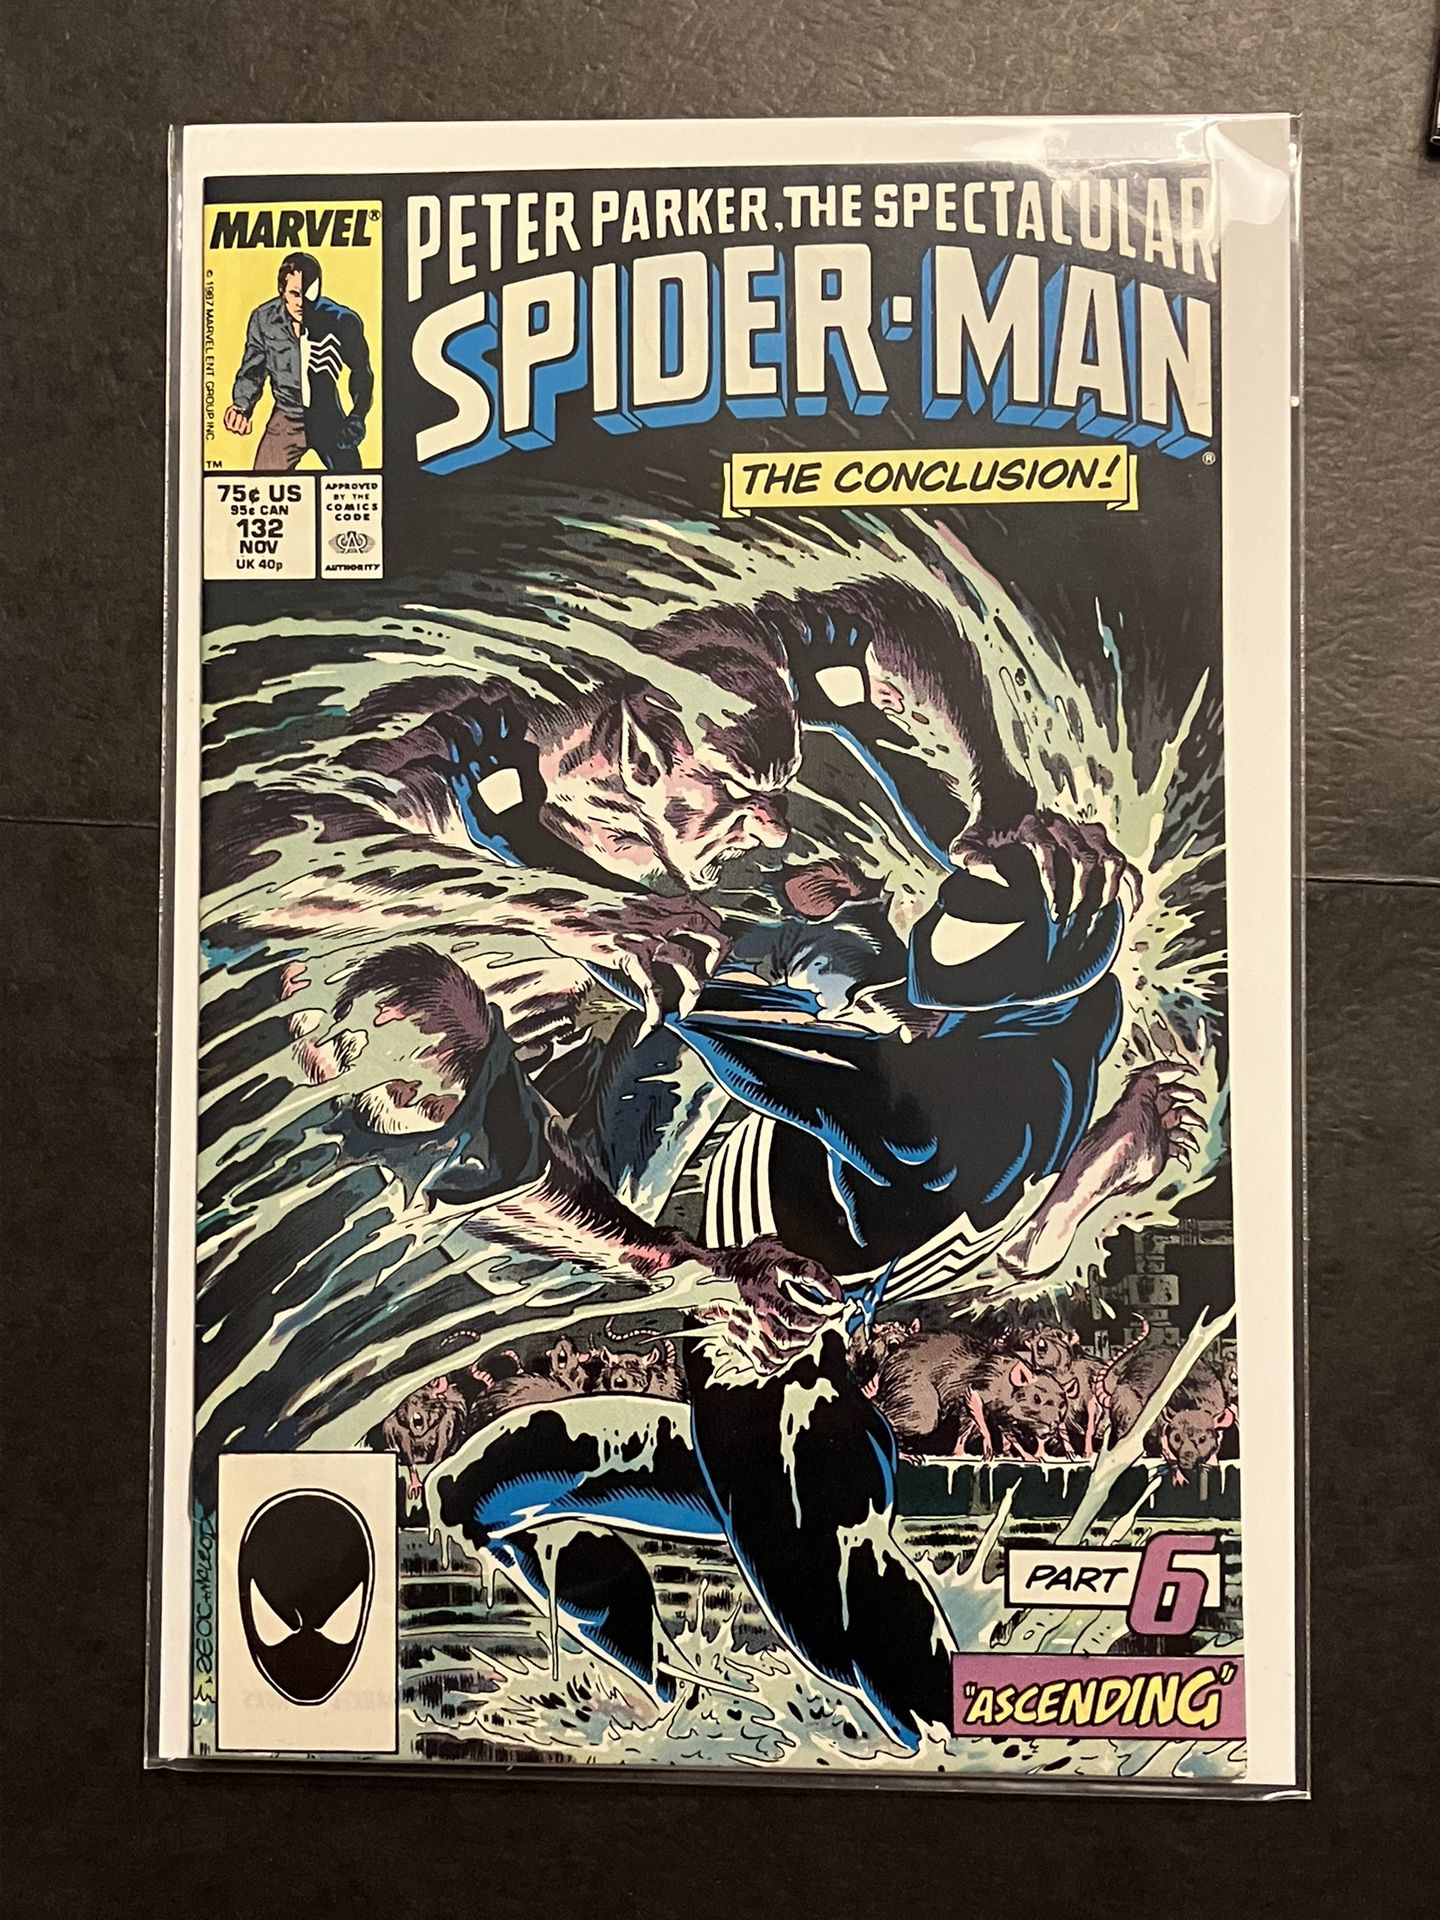 Spider-Man Comic Book